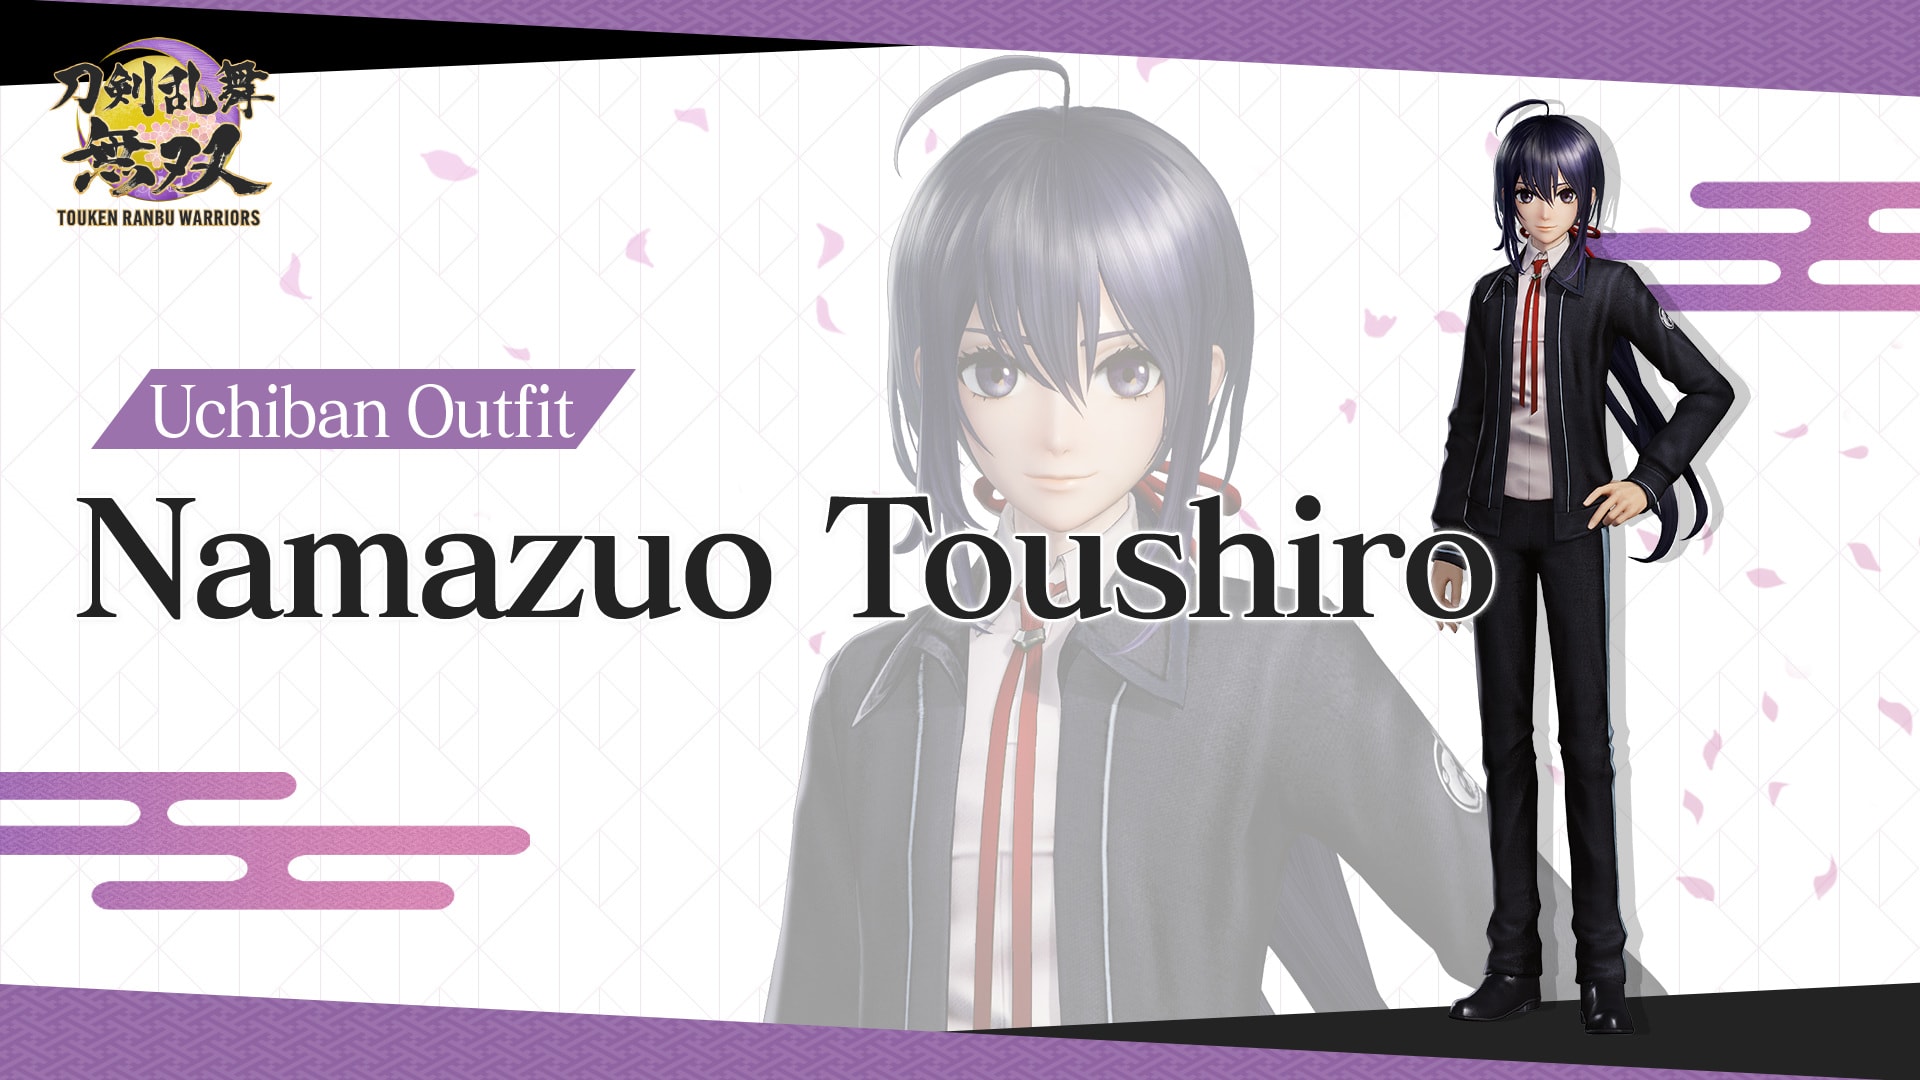 Uchiban Outfit "Namazuo Toushiro"